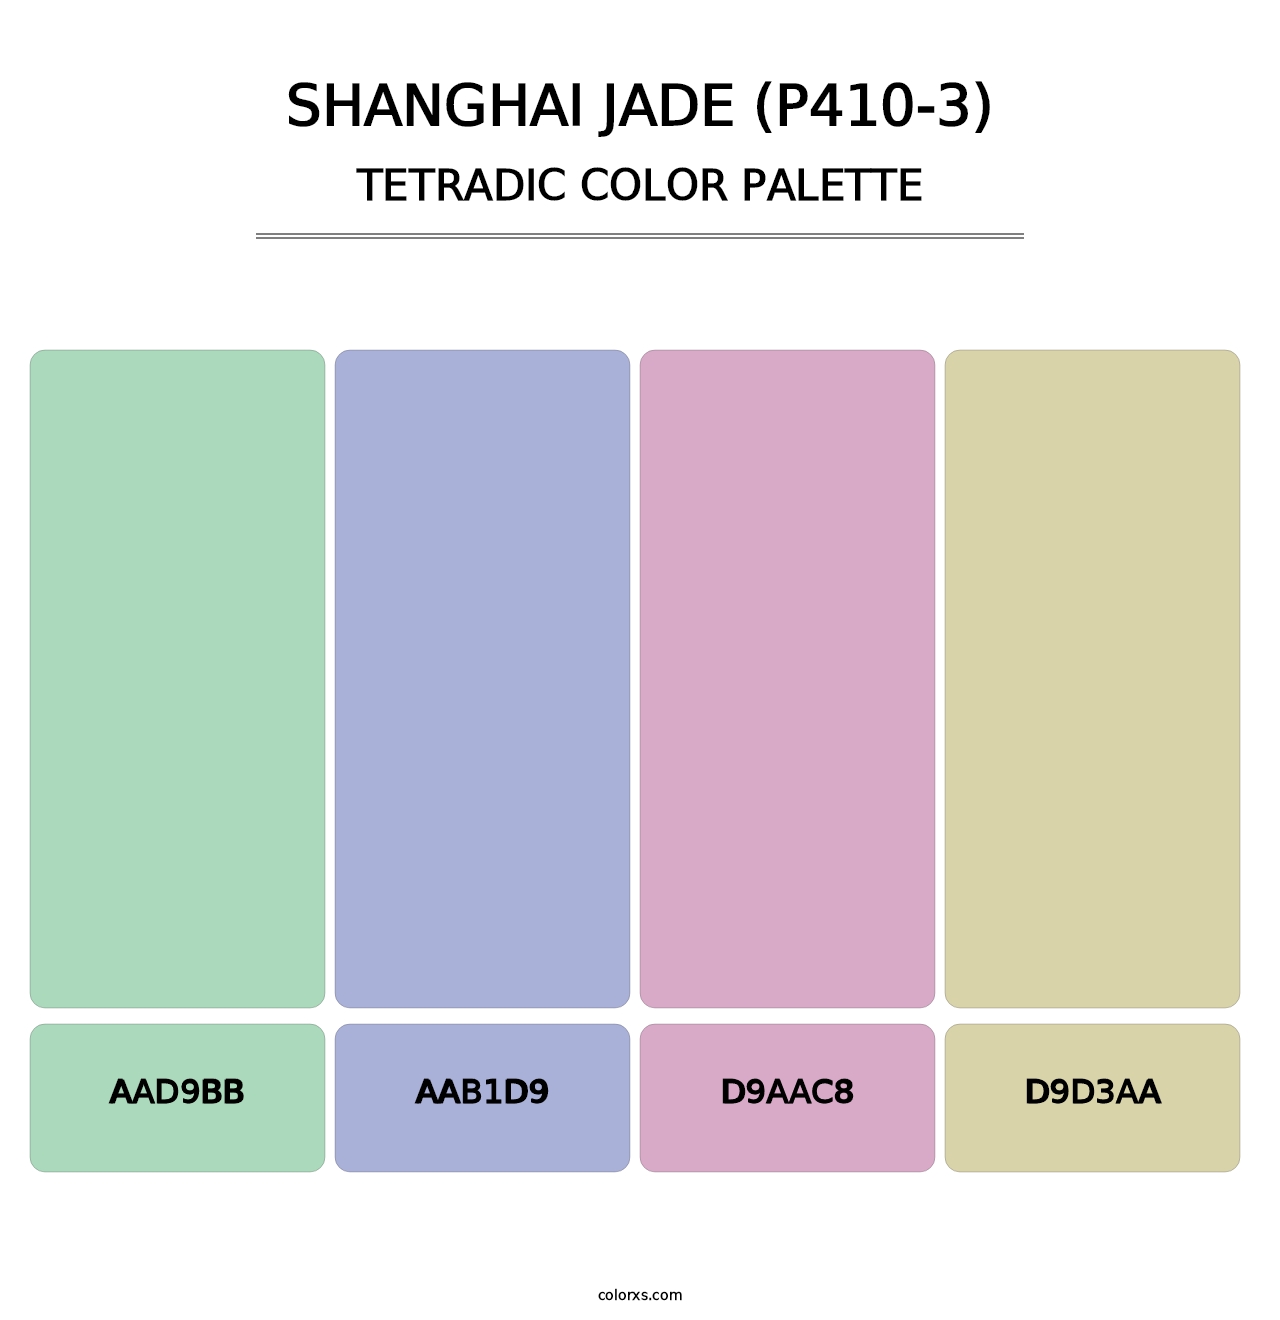 Shanghai Jade (P410-3) - Tetradic Color Palette